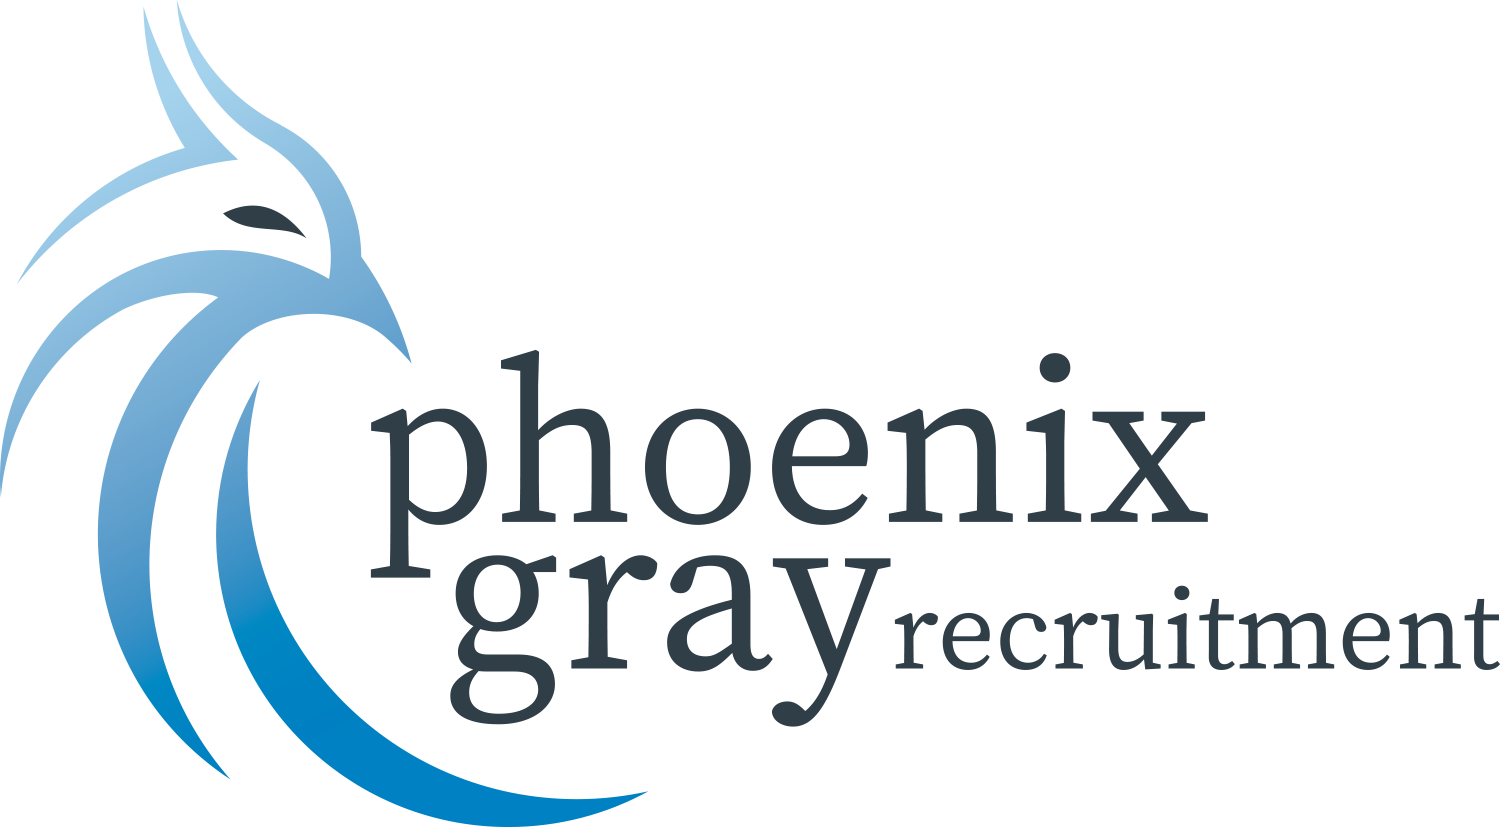 Phoenix Gray Recruitment 